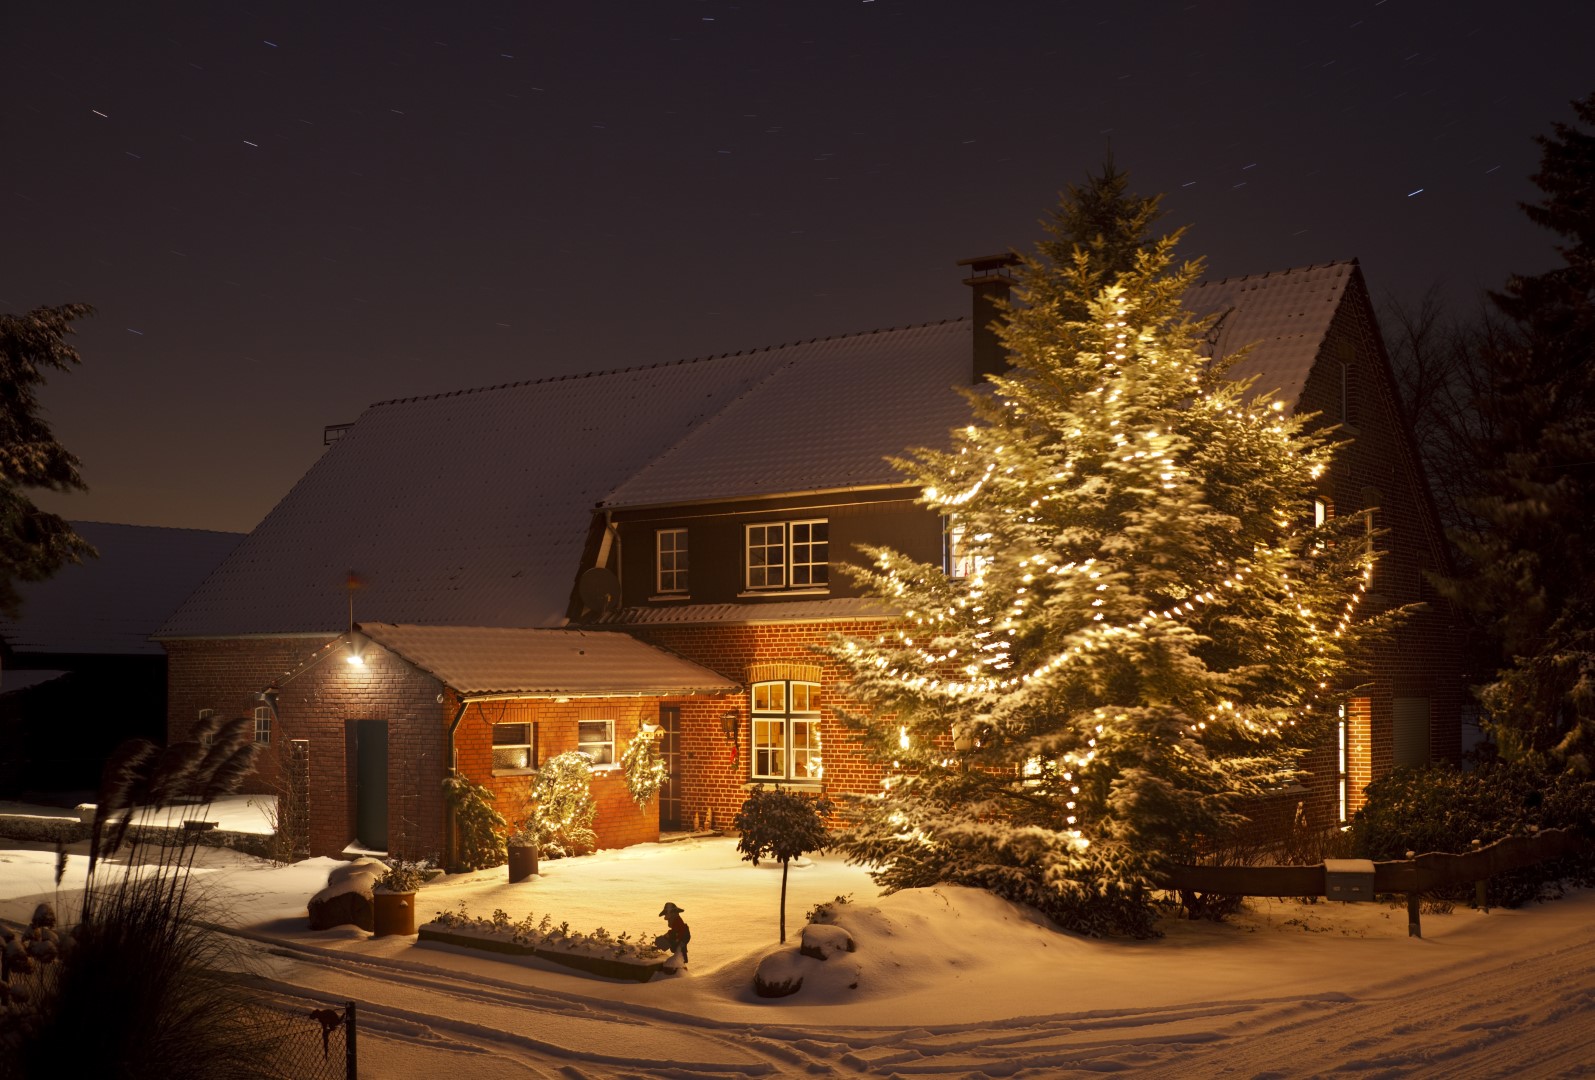 Winter House With Tall Christmas Tree At Night 2021 08 26 17 00 31 Utc